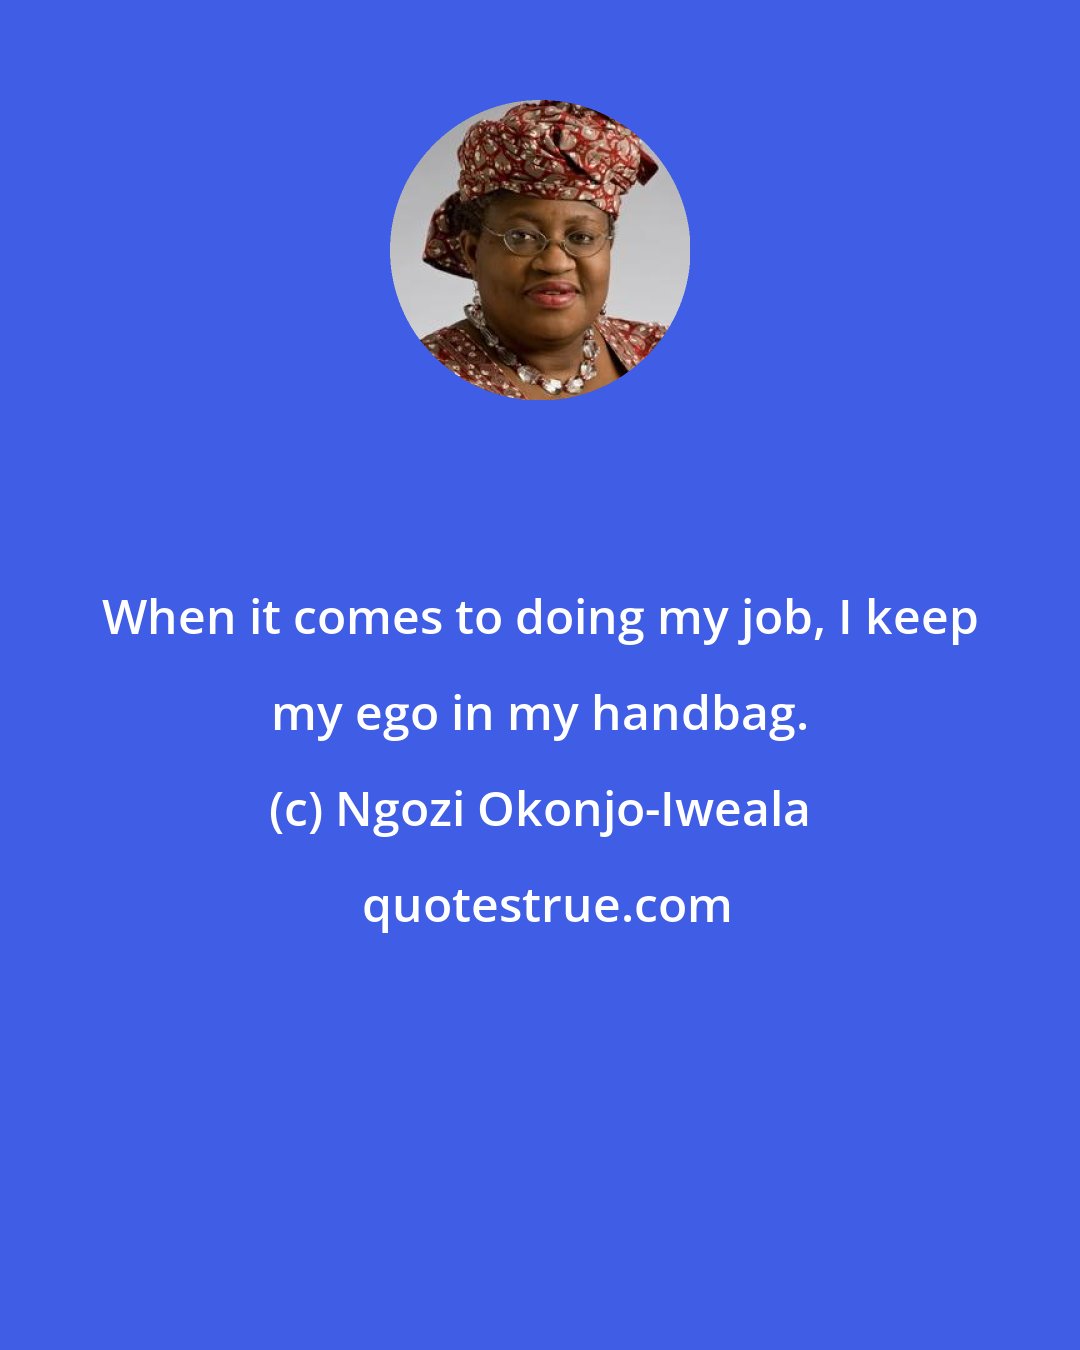 Ngozi Okonjo-Iweala: When it comes to doing my job, I keep my ego in my handbag.